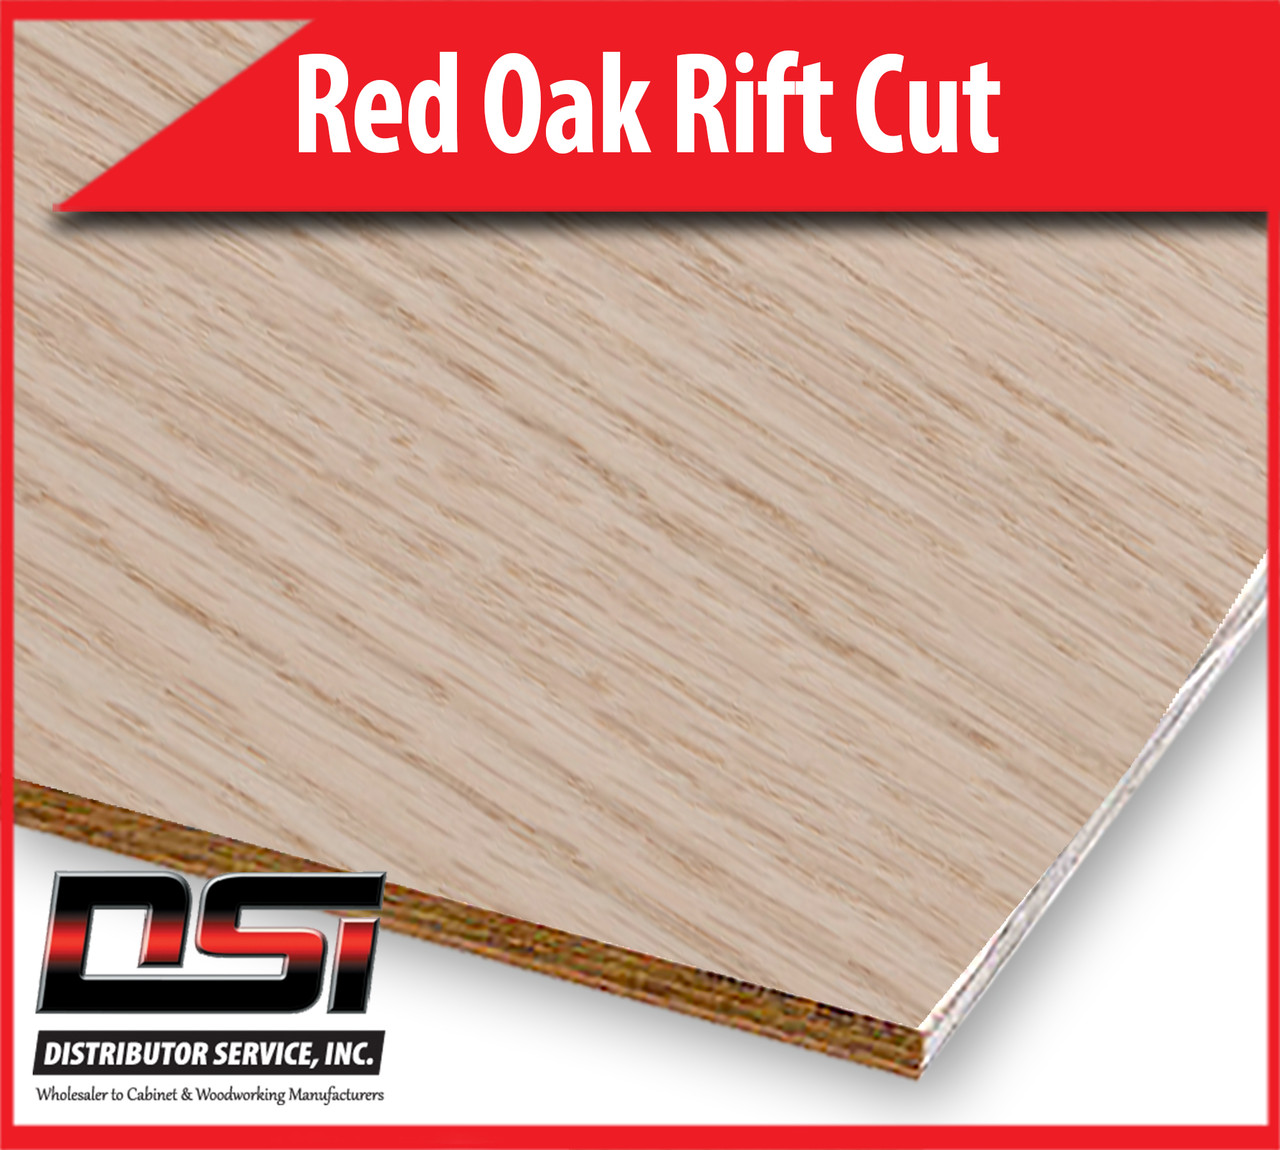 Red Oak Plywood Rift Cut VC A1 3/4" x 4x8